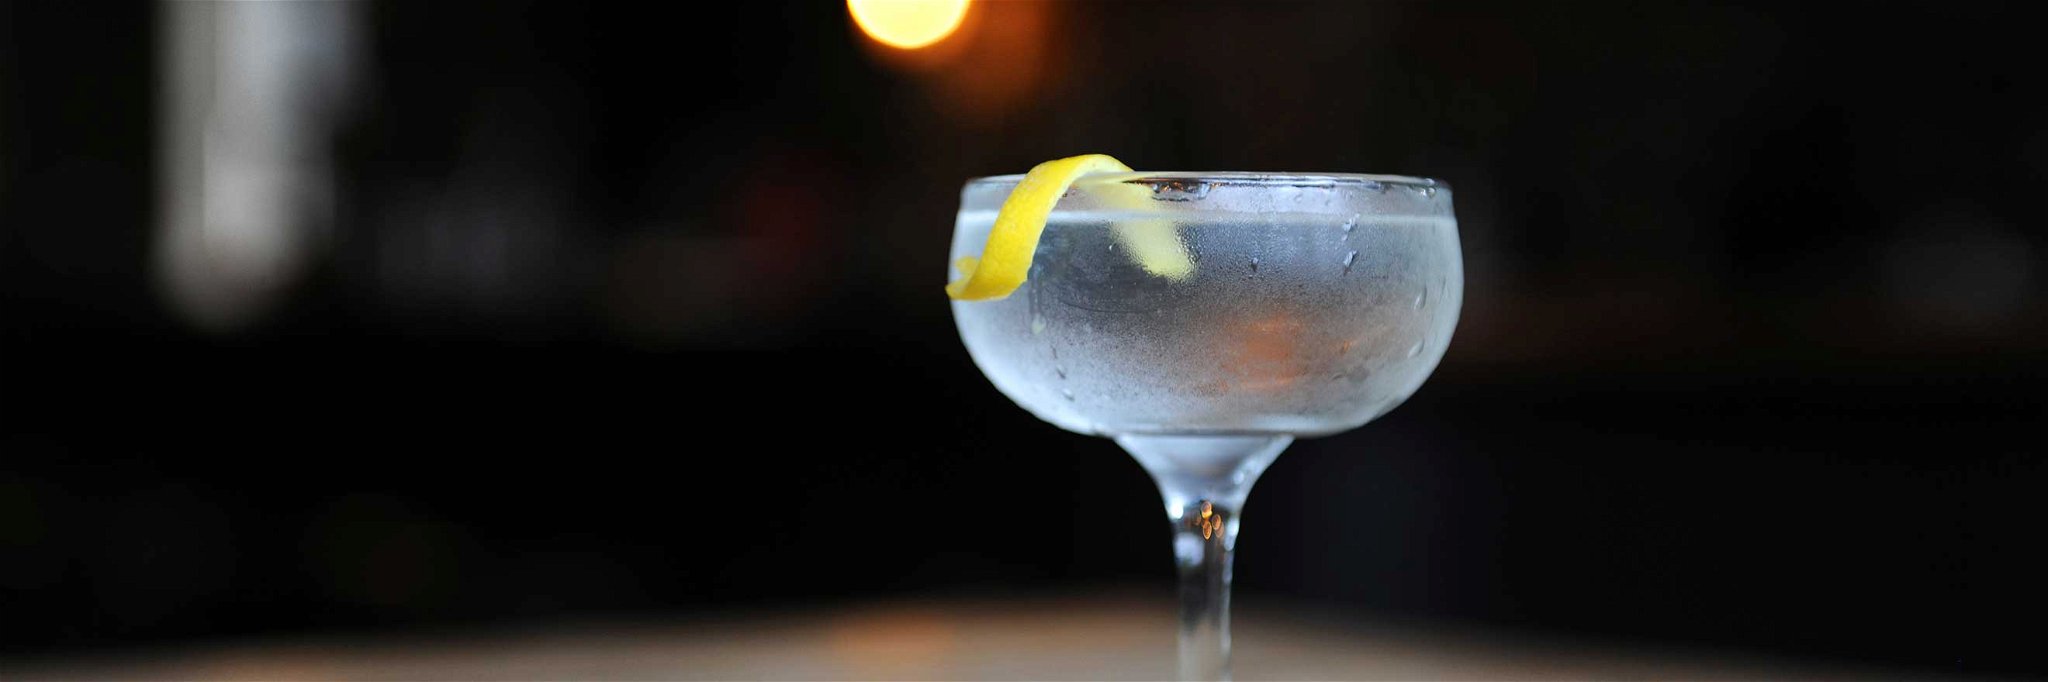 Wodka Martini, ein Cocktail-Klassiker